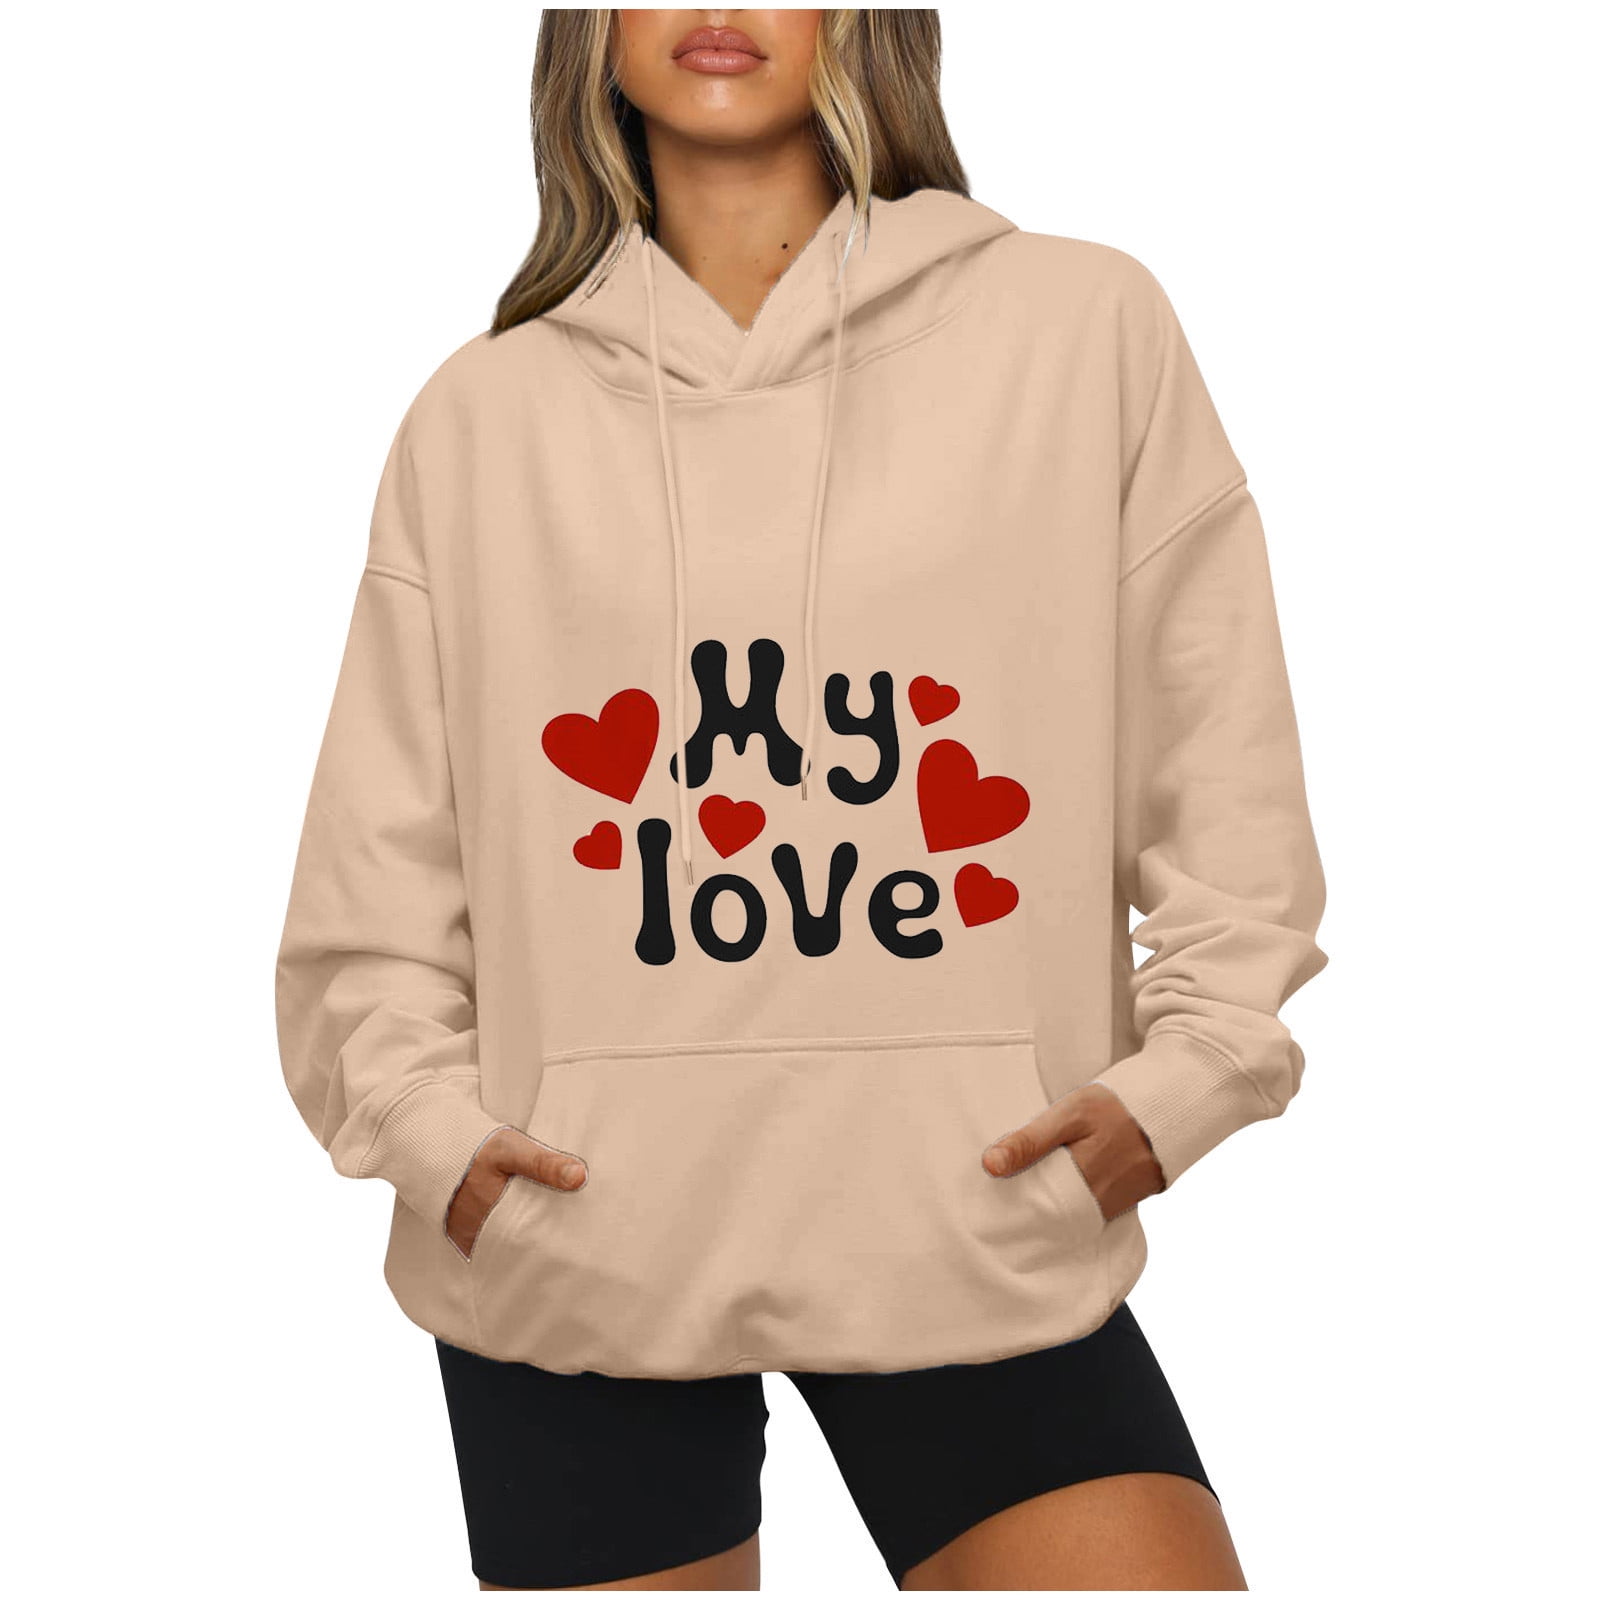 Cute Oversized Sweatshirts,Women's Fashion Love Printed Long Sleeve ...